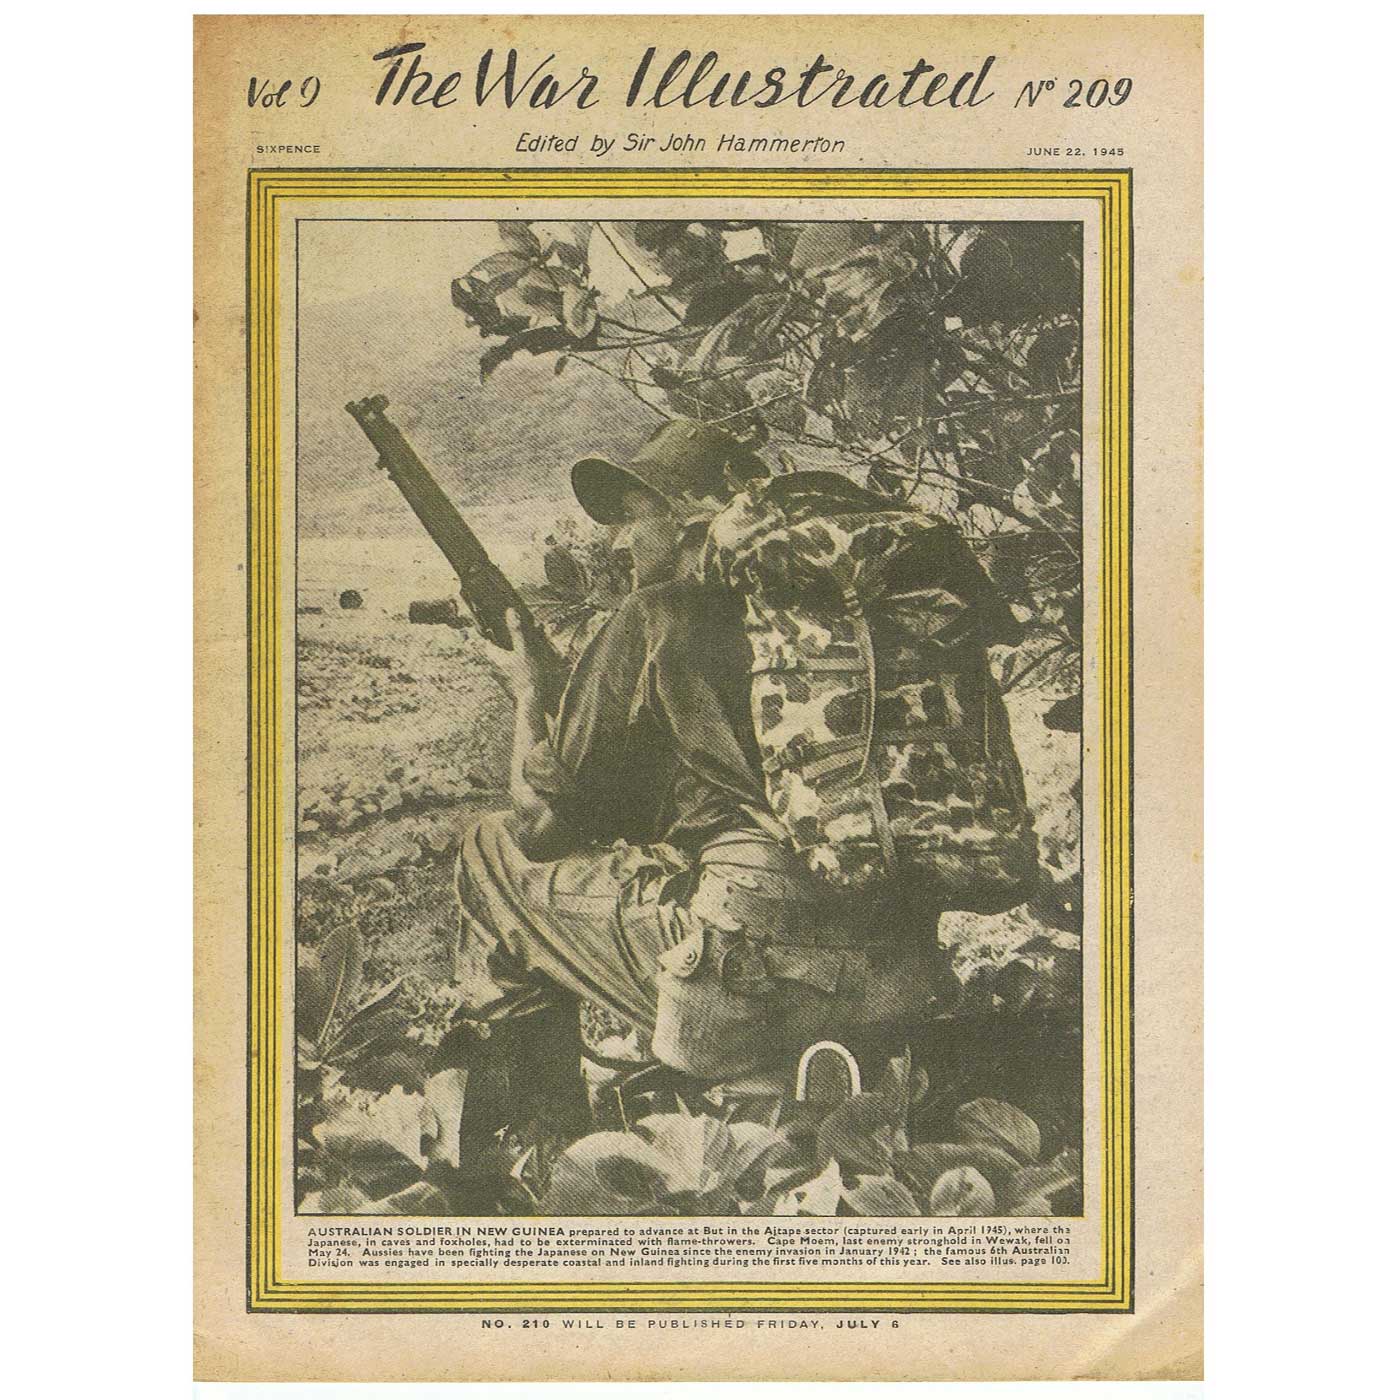 Koritza Greece, Blitz, Bardia, Manchester, London, WW2 The War Illustrated #72 